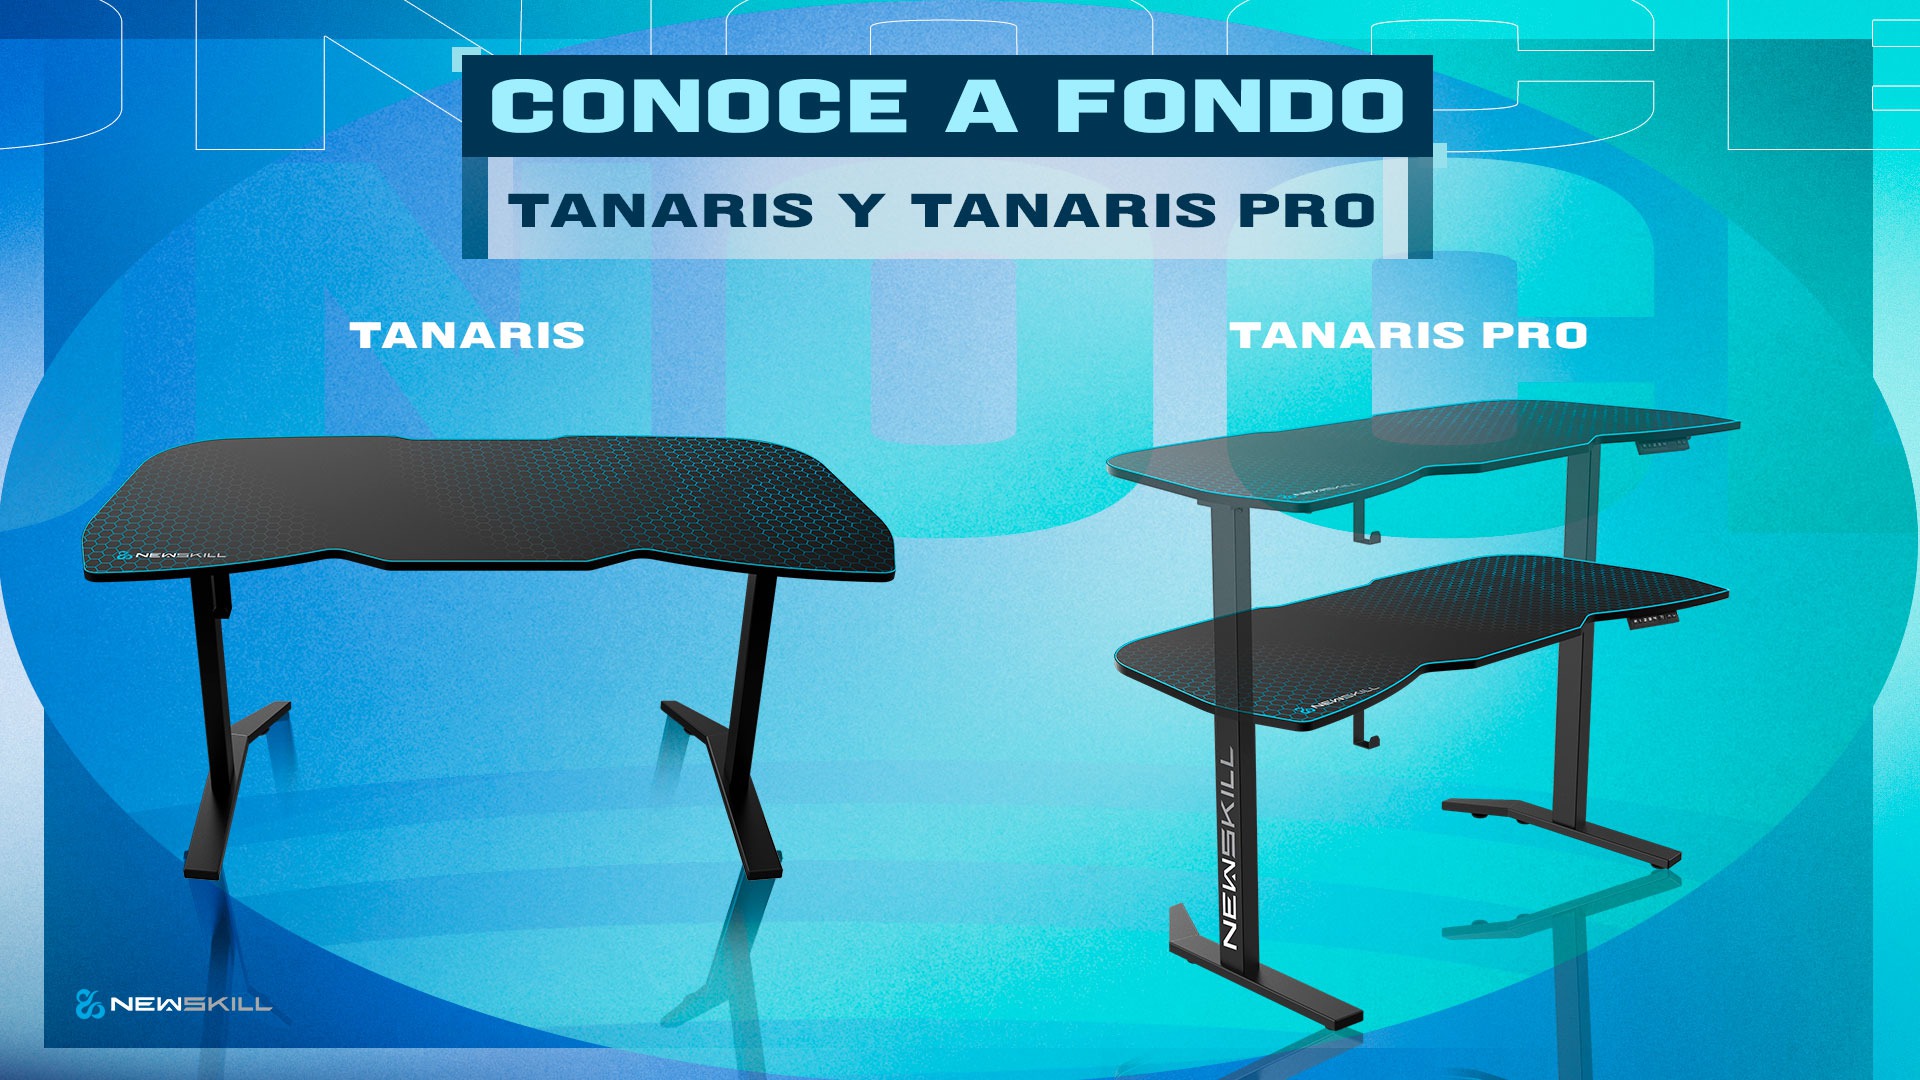 Get to know Tanaris and Tanaris Pro in depth